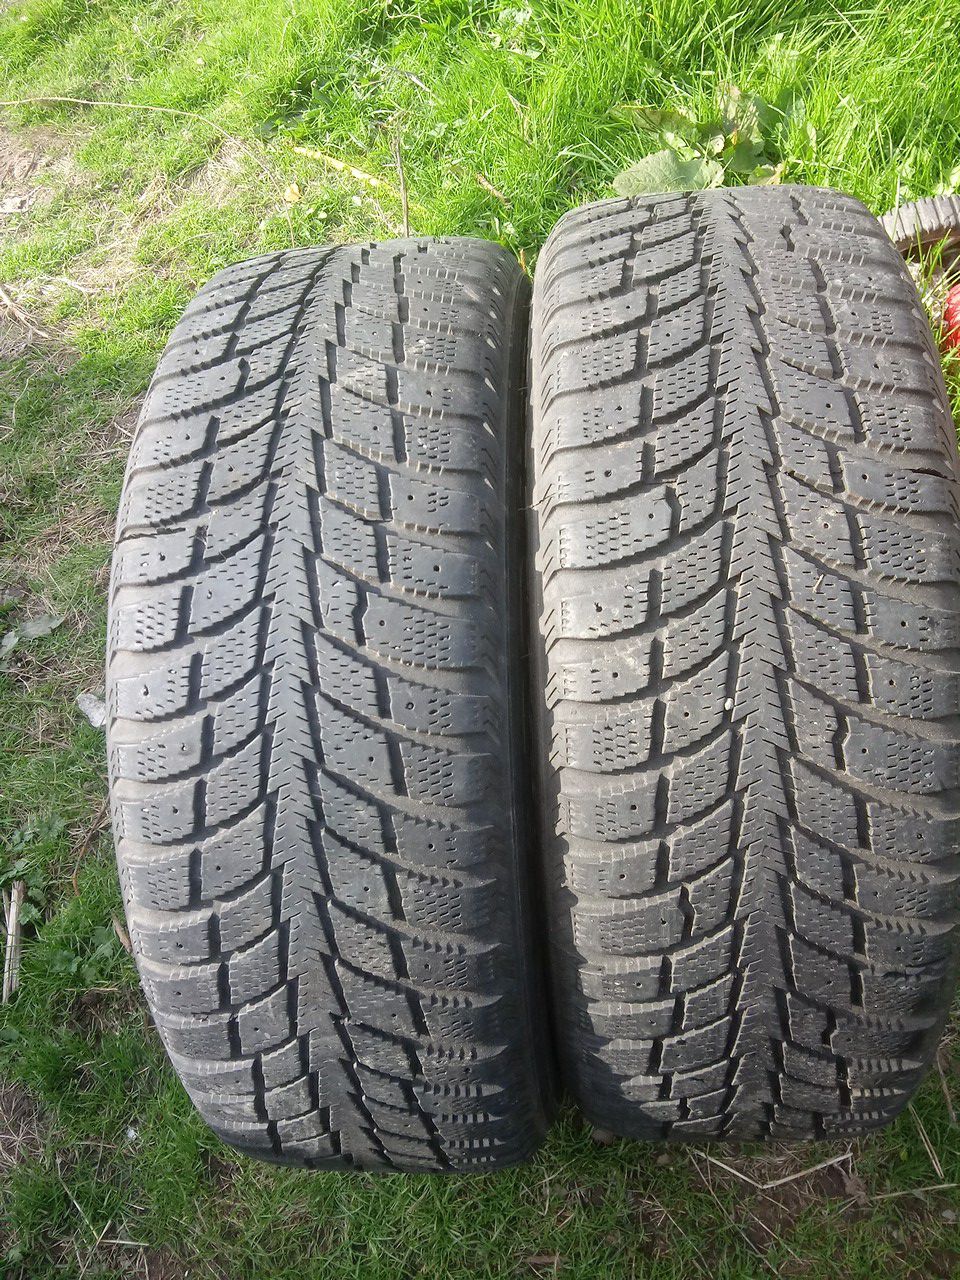 Winter tires on volkswagon rims